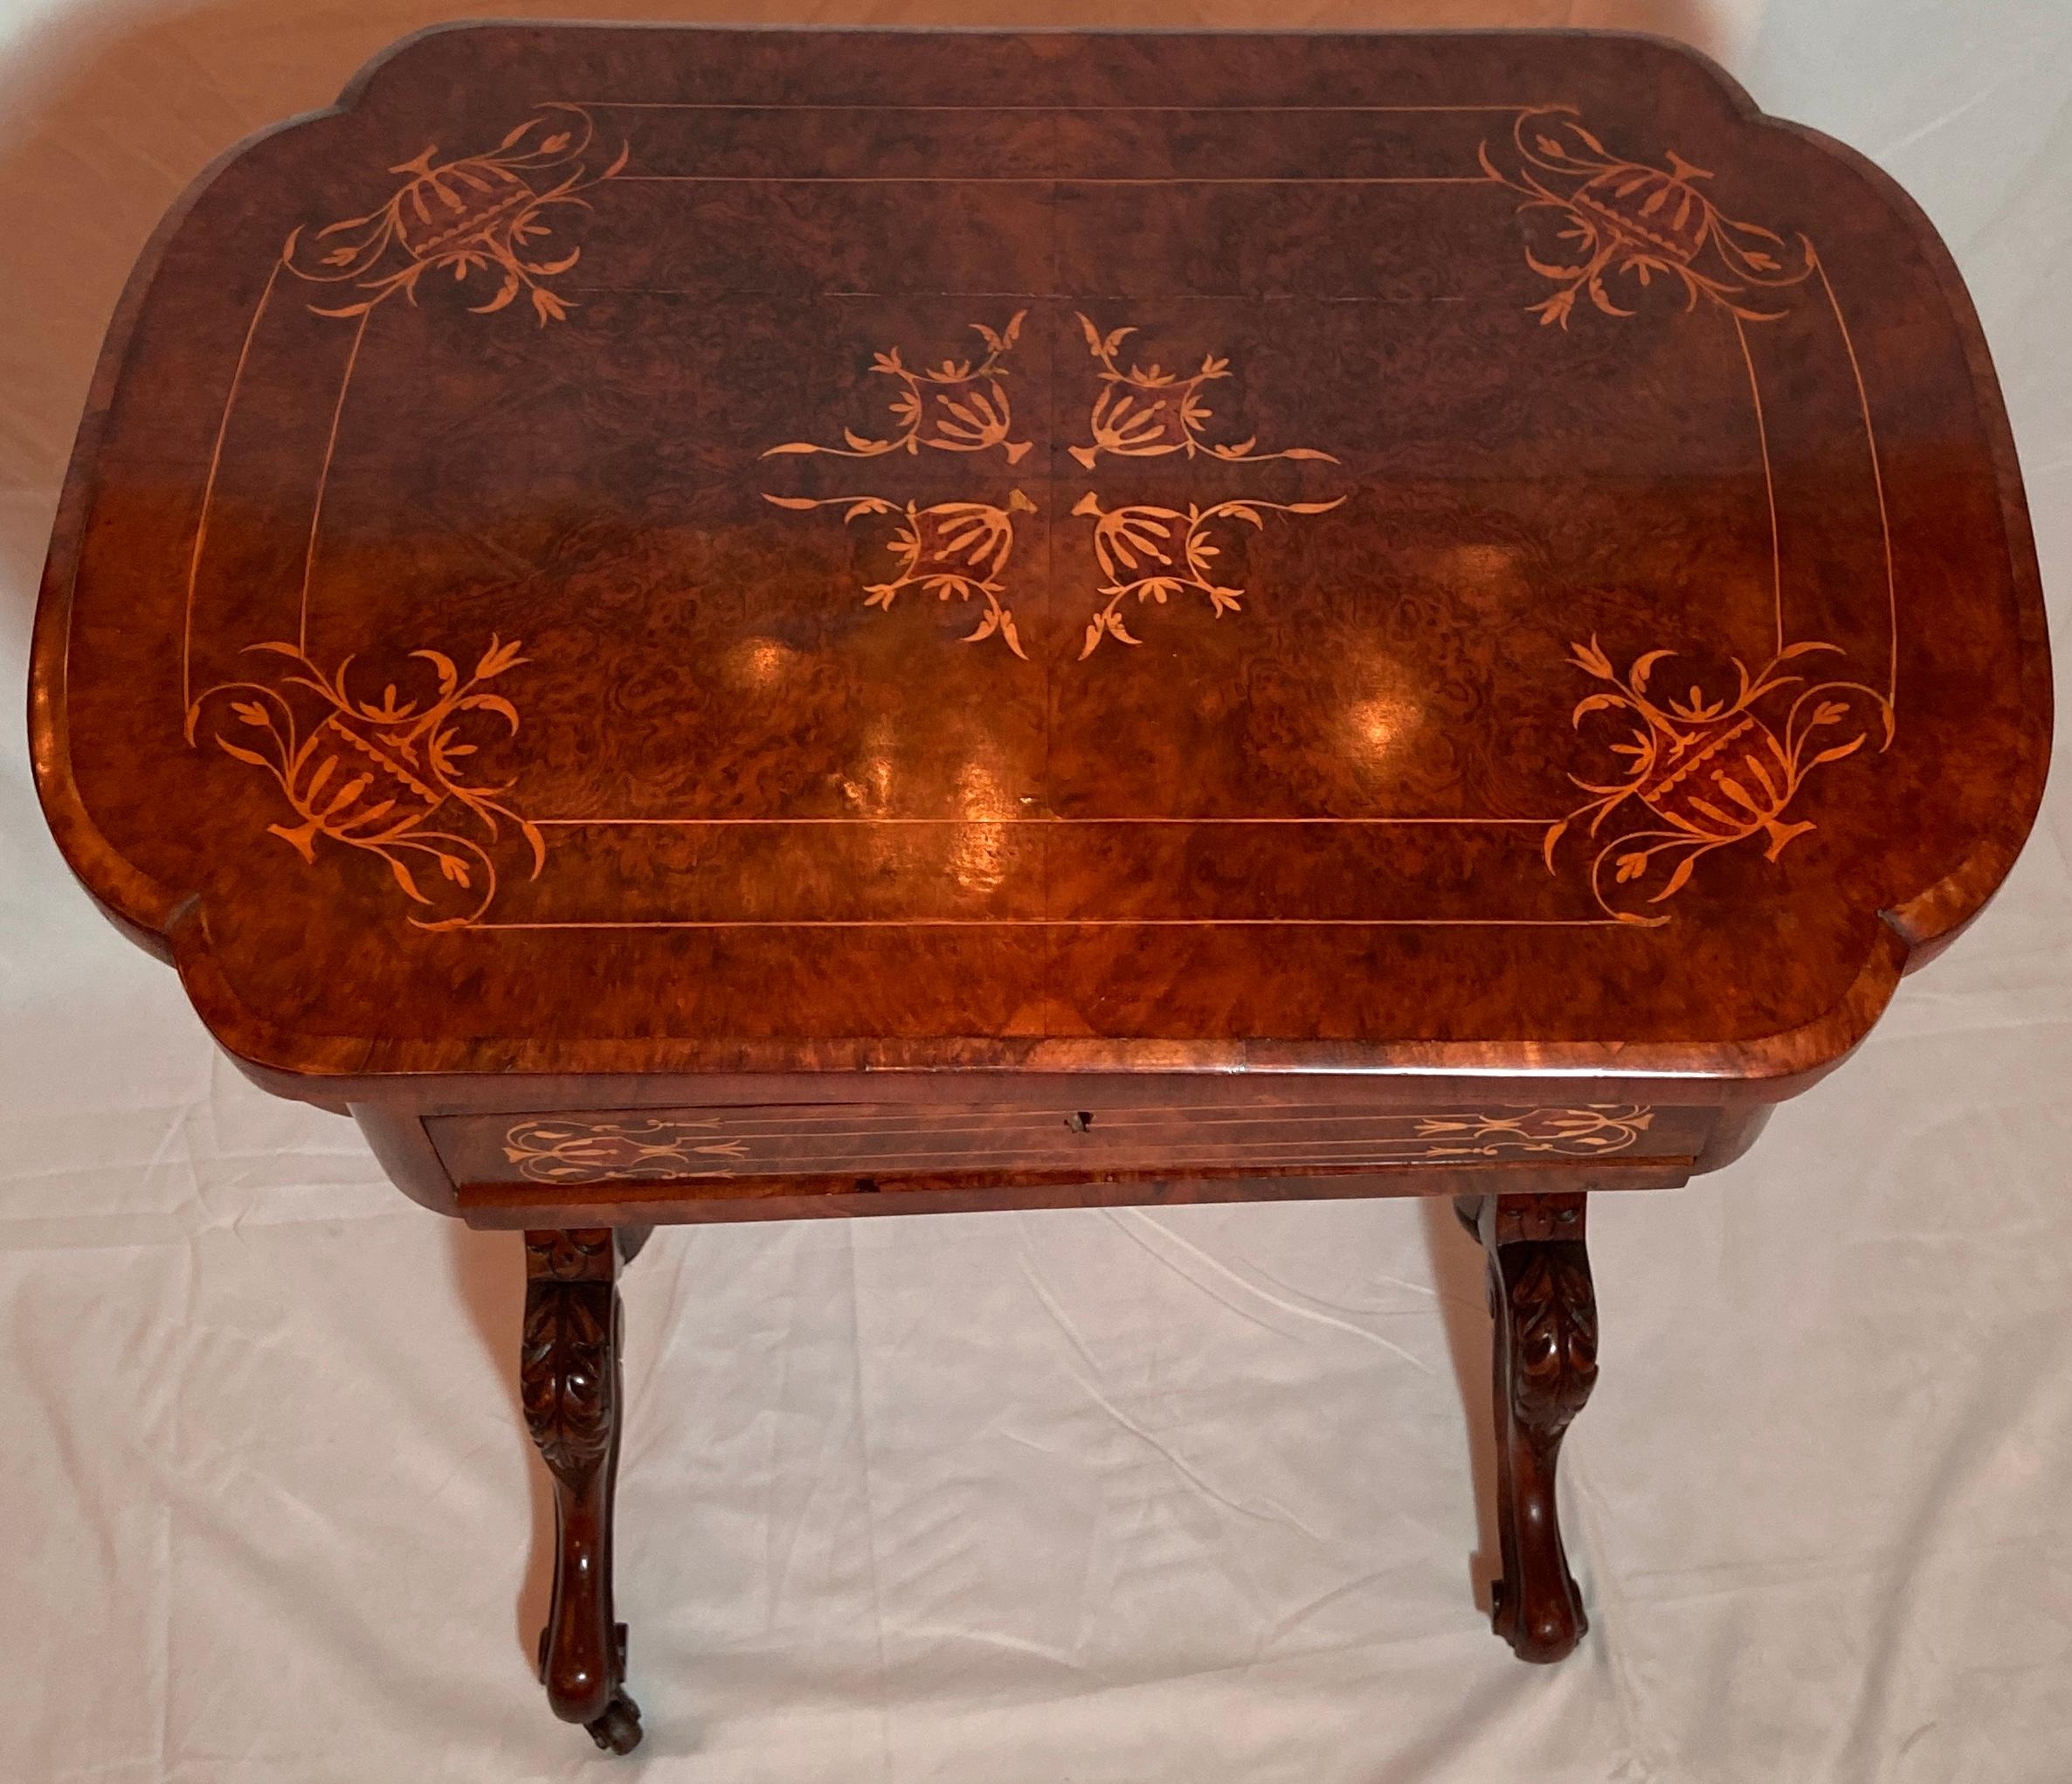 Inlay Antique English Burled Walnut Satinwood Inlaid Games Table, Circa 1865-1885